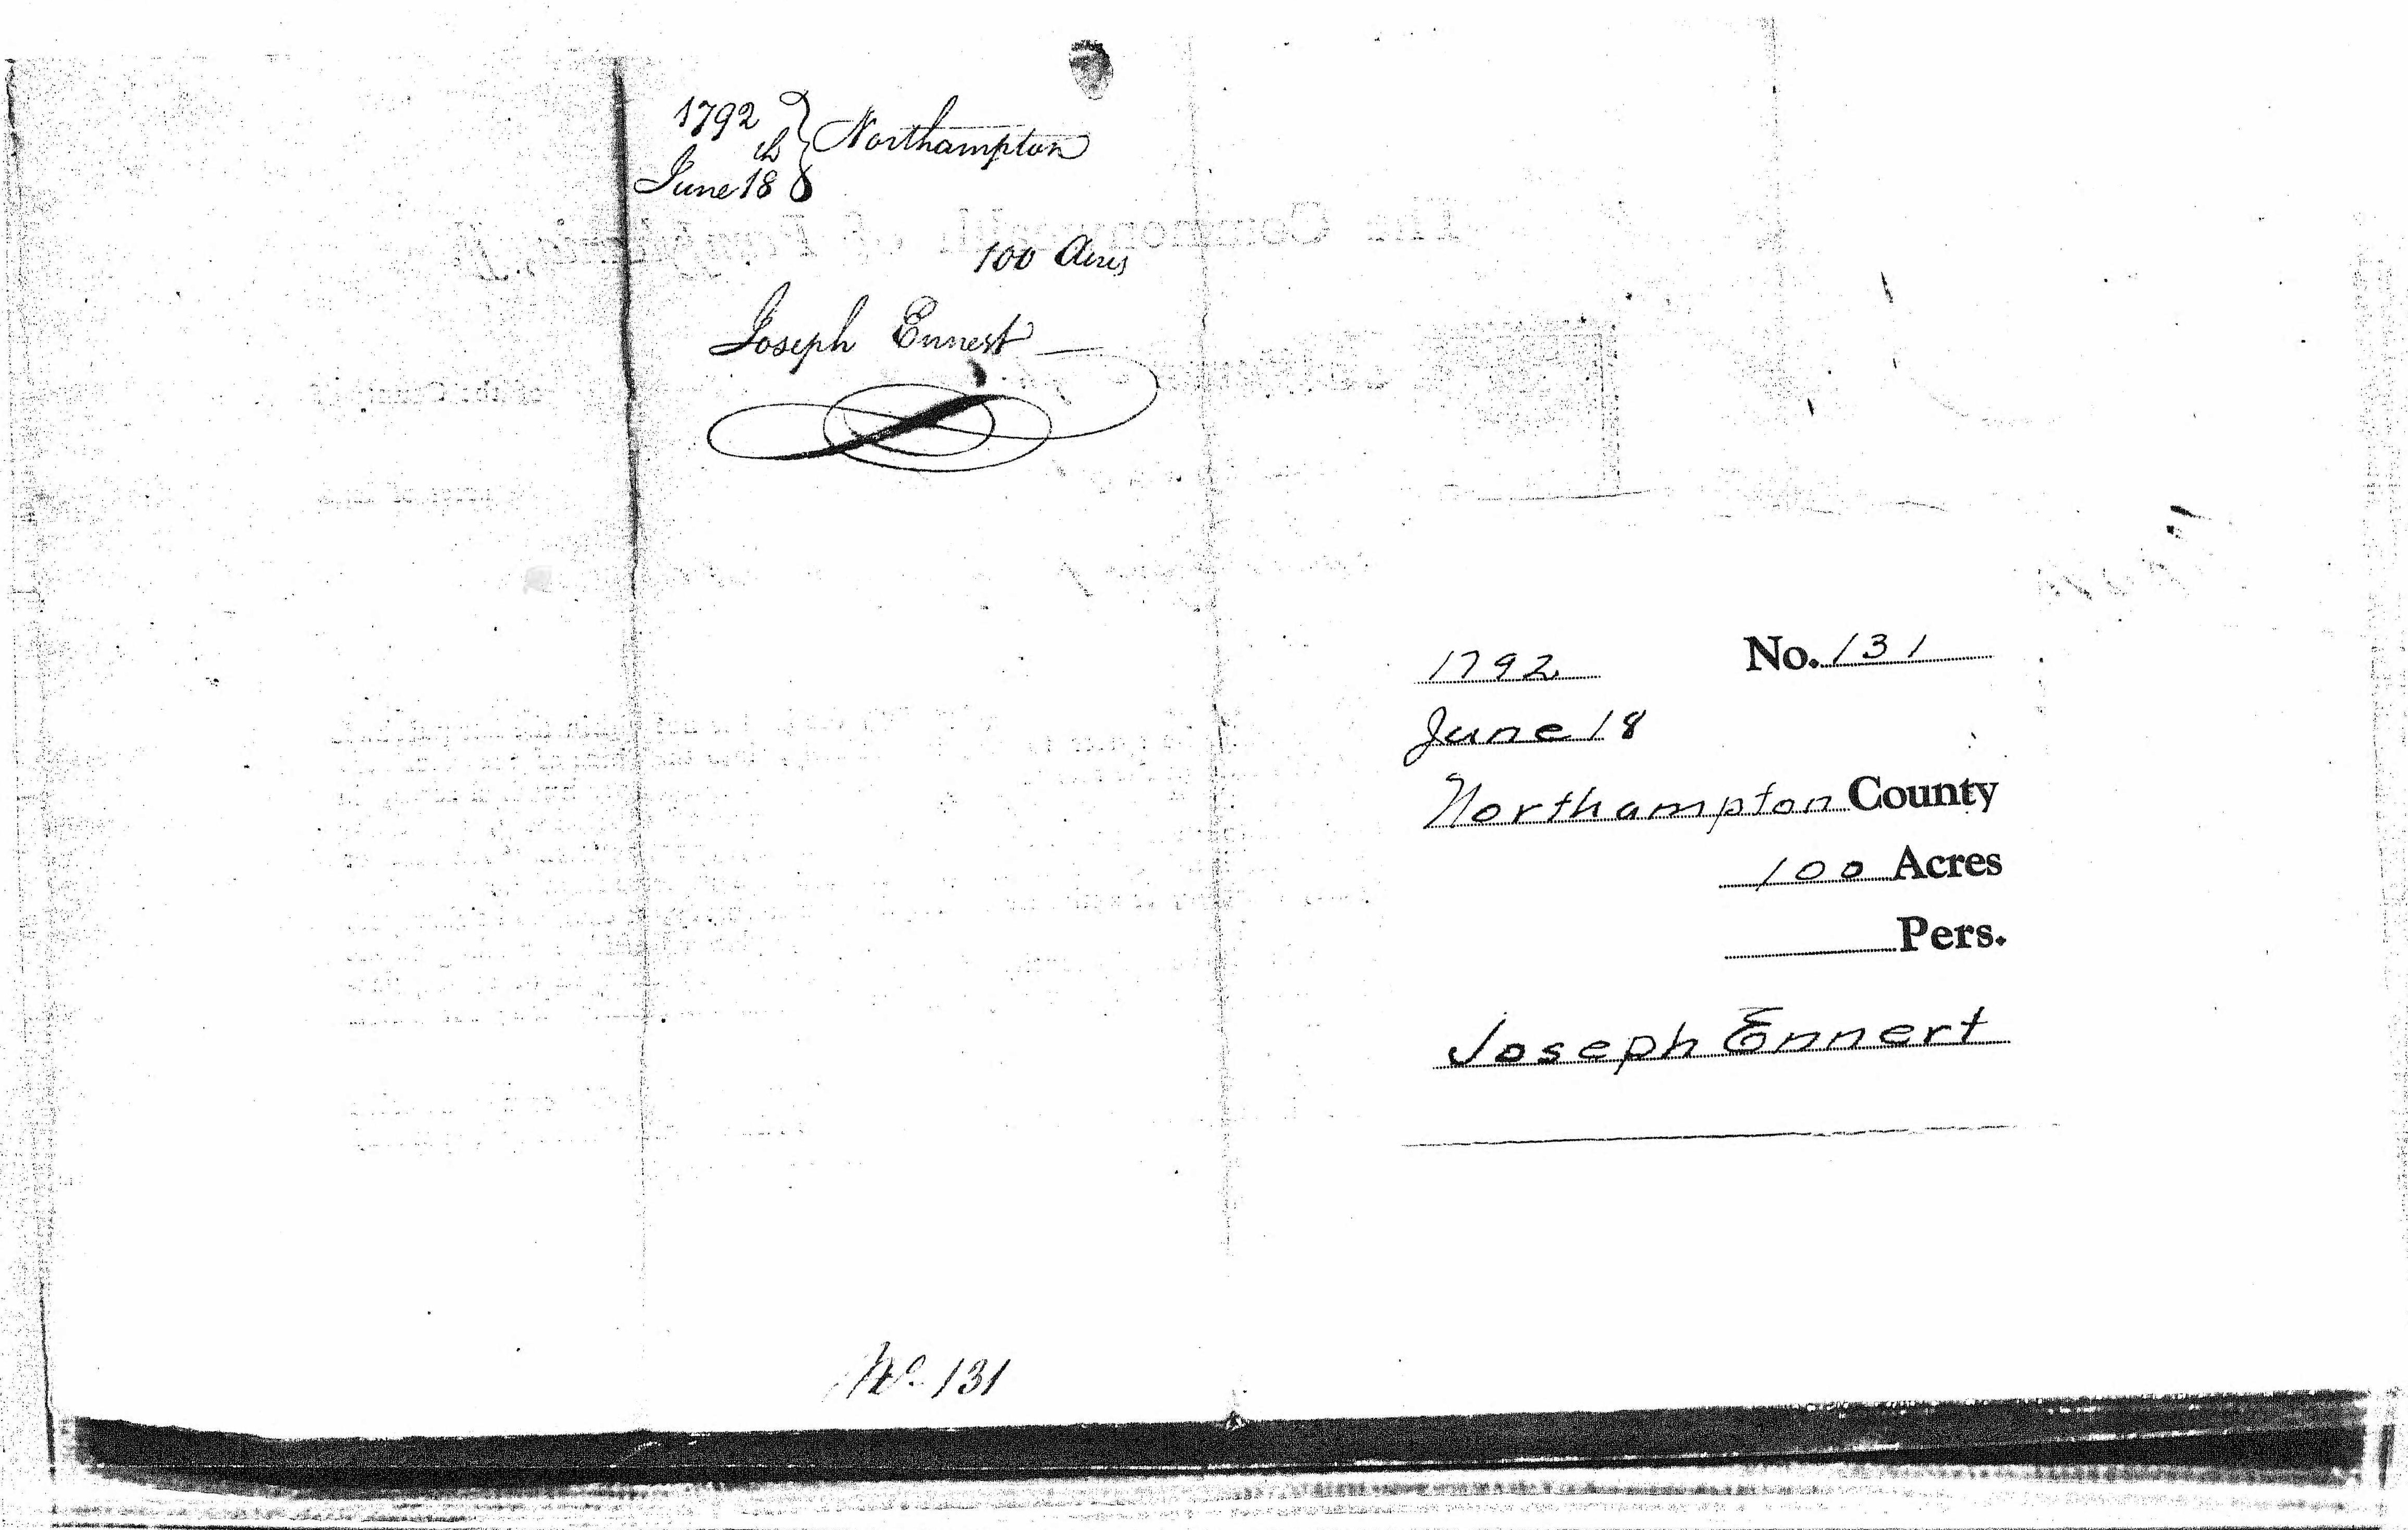 Land warrant of Joseph Ennest, page 1